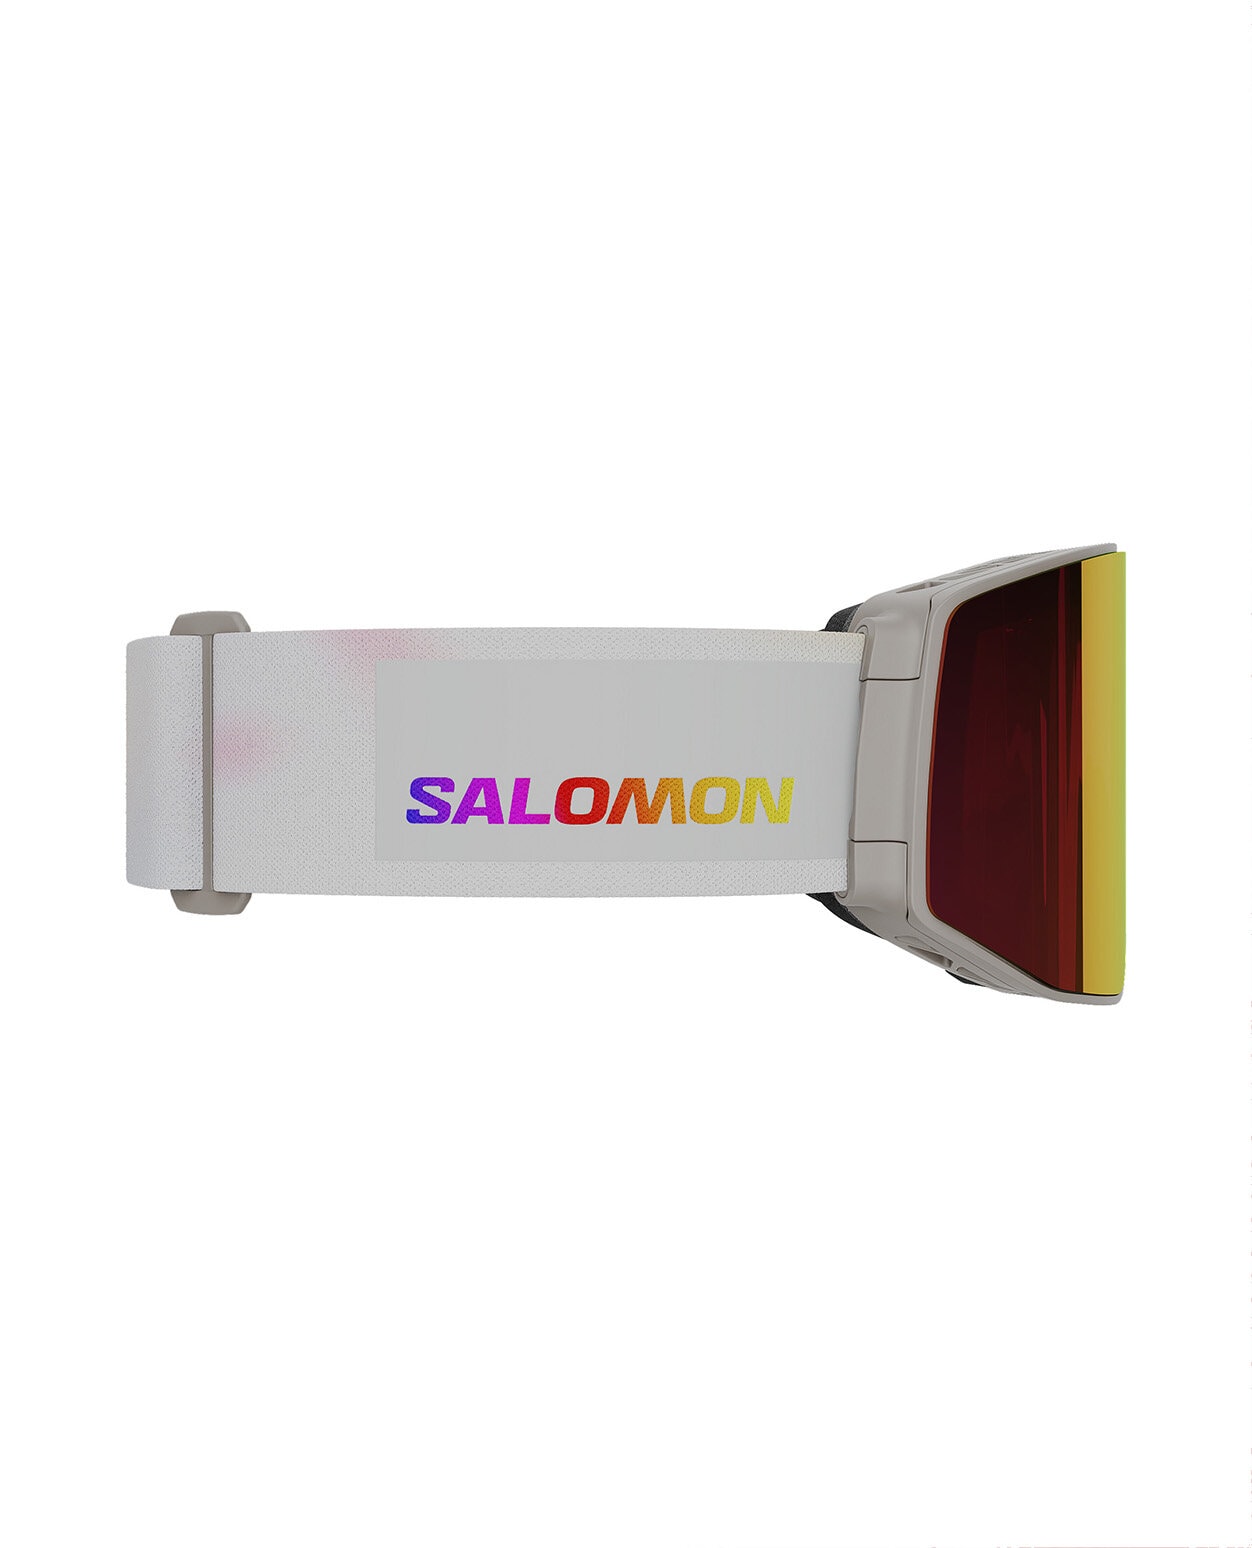 Salomon Sentry Prime Sigma Grey / Sigma Poppy Red